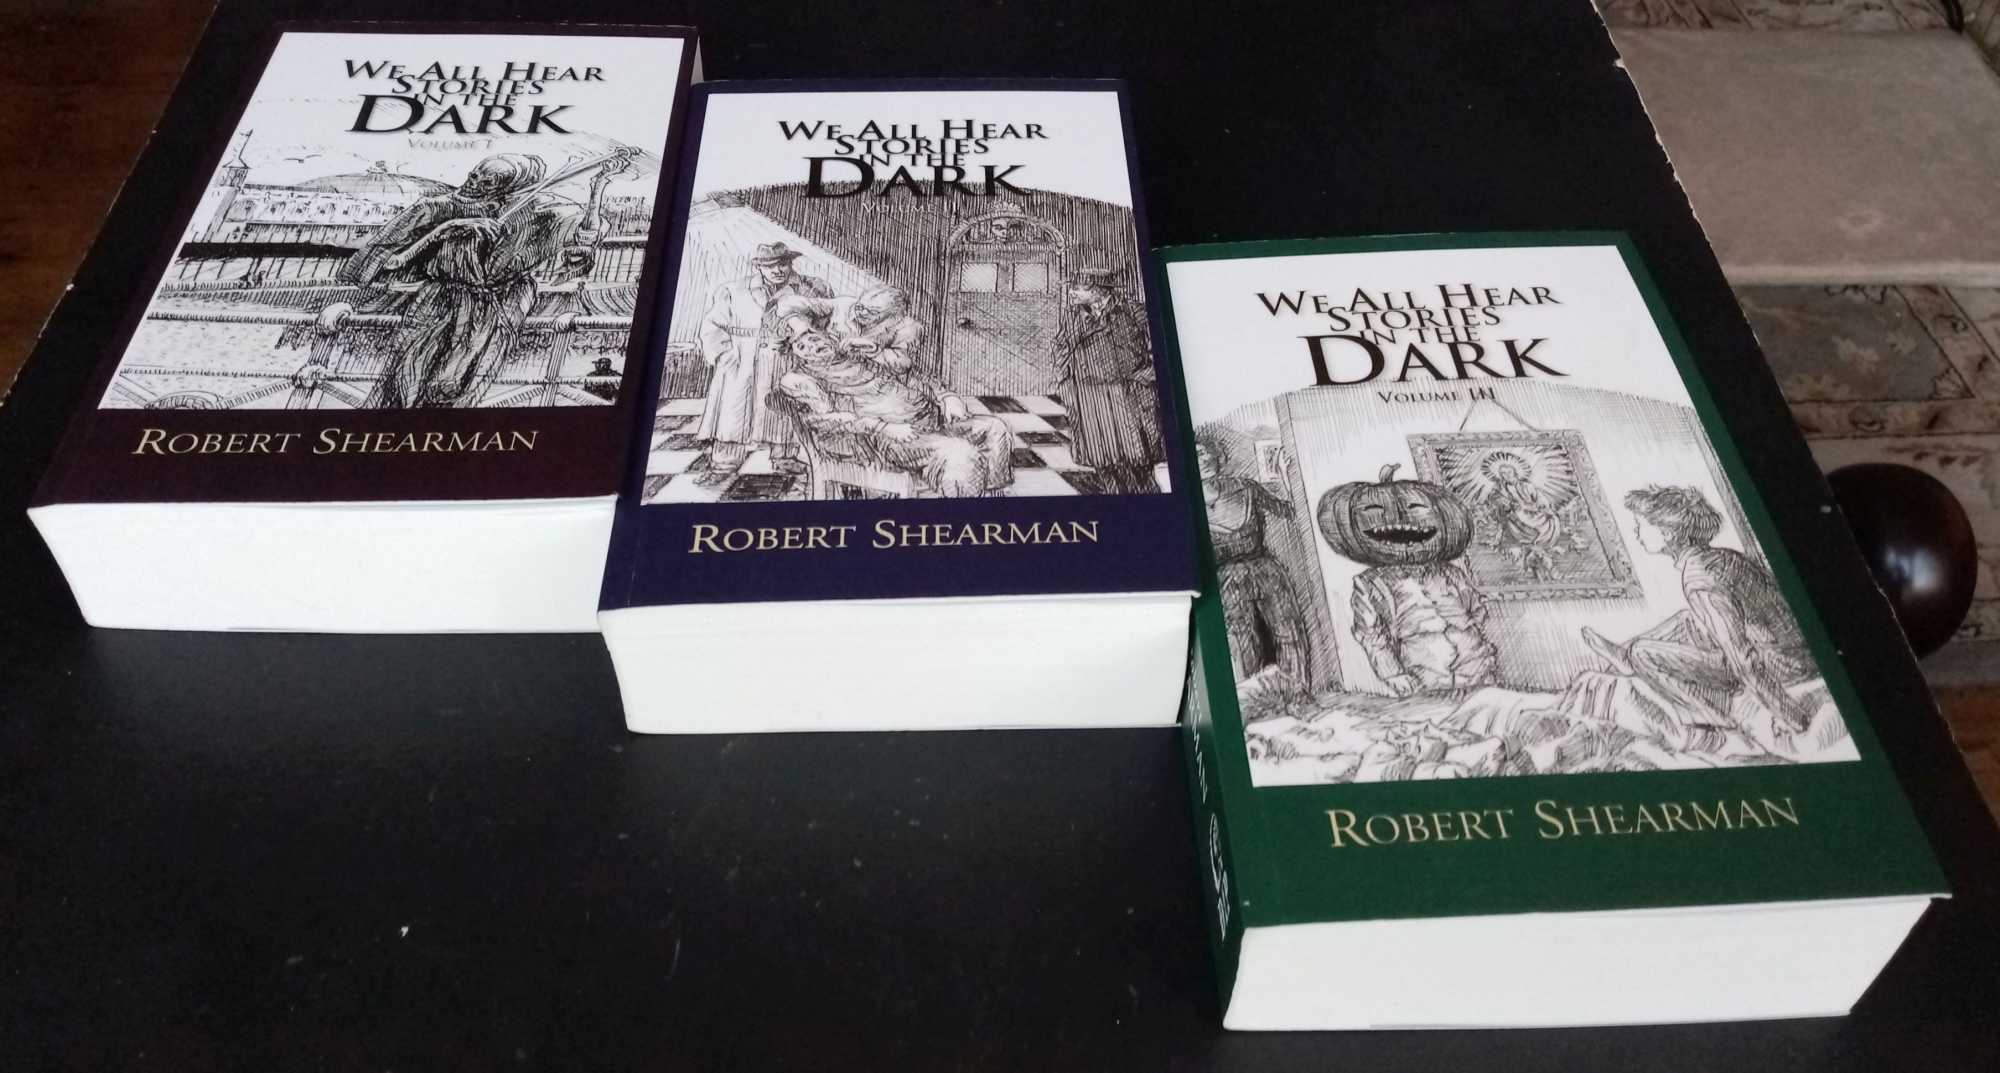 Robert Shearman et al - We All Hear Stories in the Dark 3 Volume Set